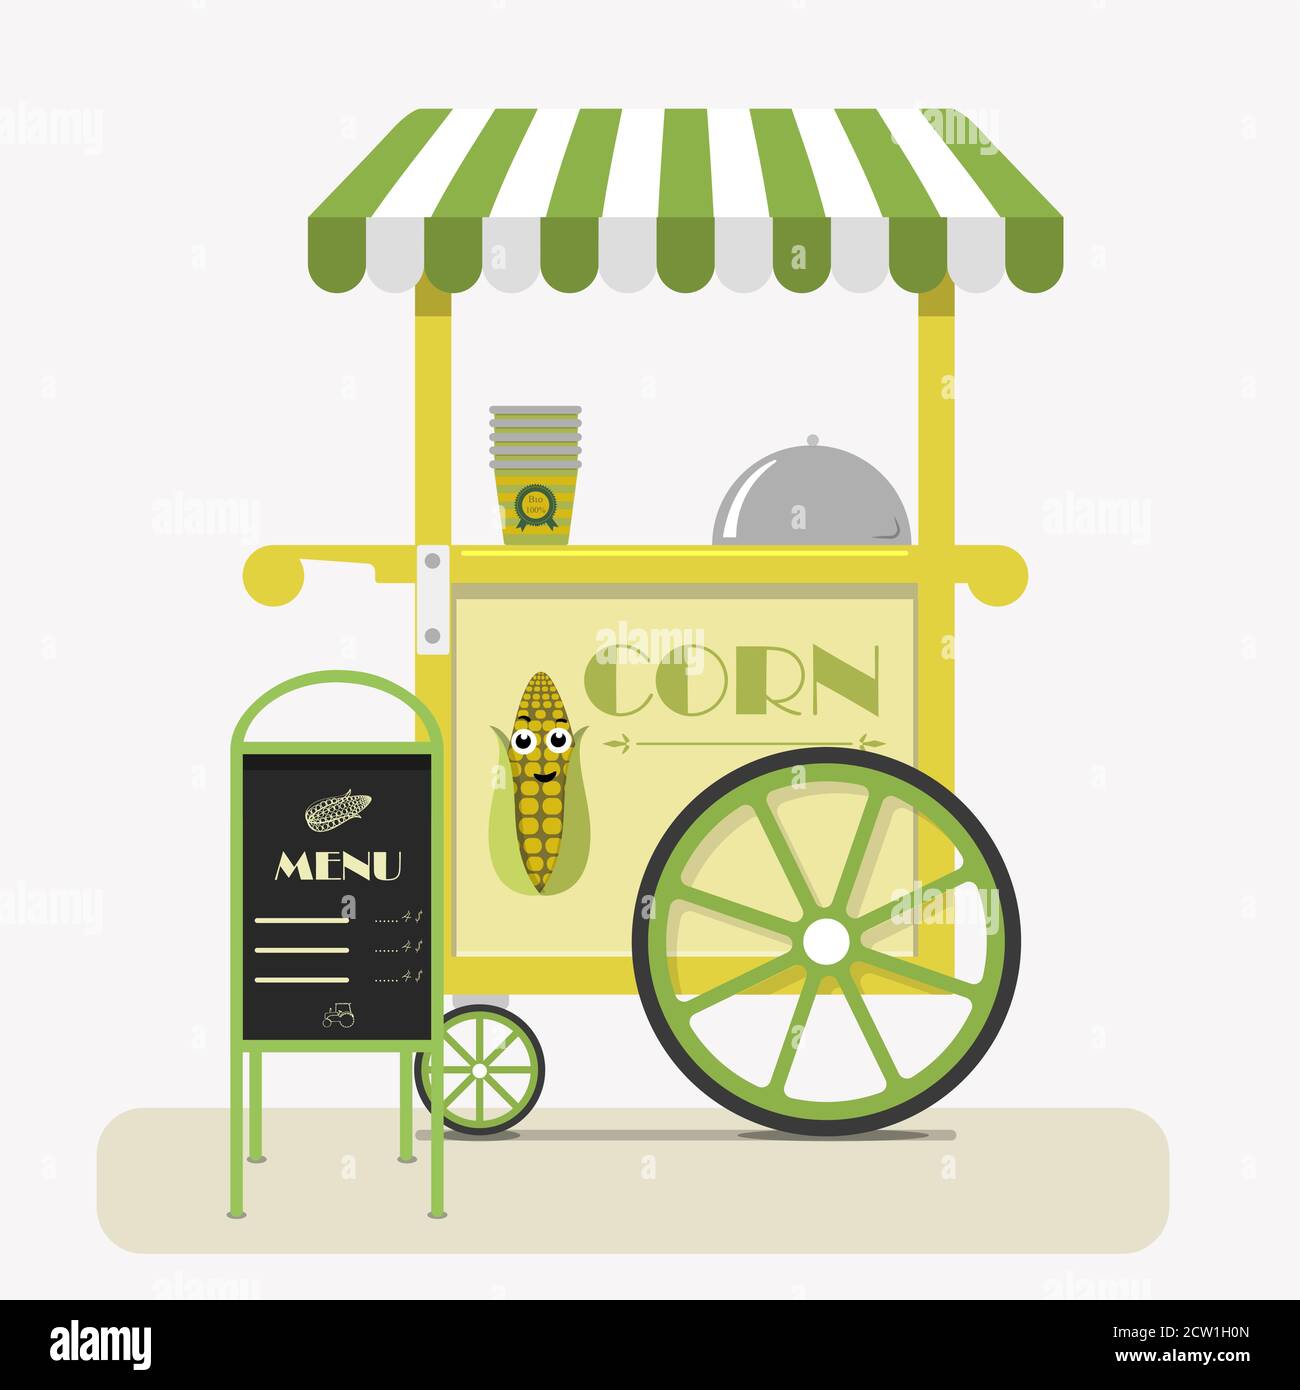 Ice cream cart. Cartoon street food icon Stock Vector Image & Art - Alamy